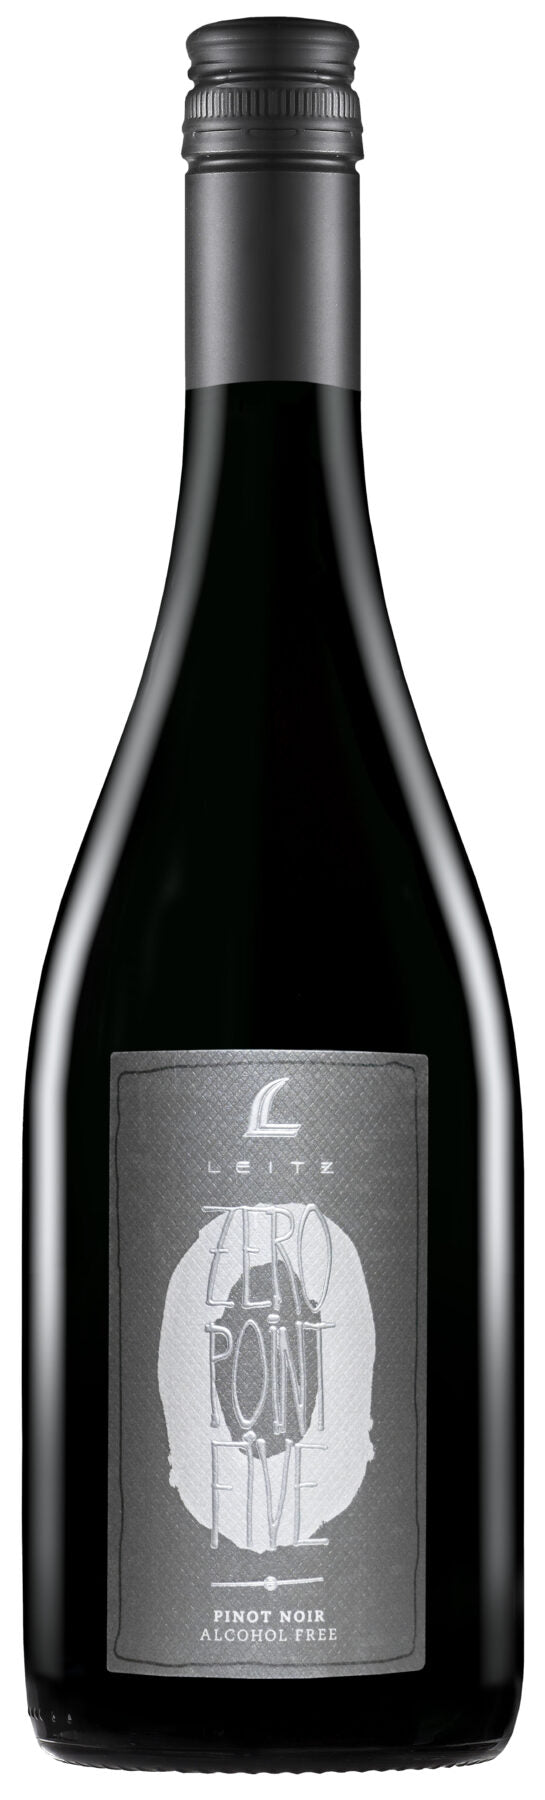 JJ Leitz NV Zero Point Five Pinot Noir 05%, Leitz NV6x75cl - Just Wines 